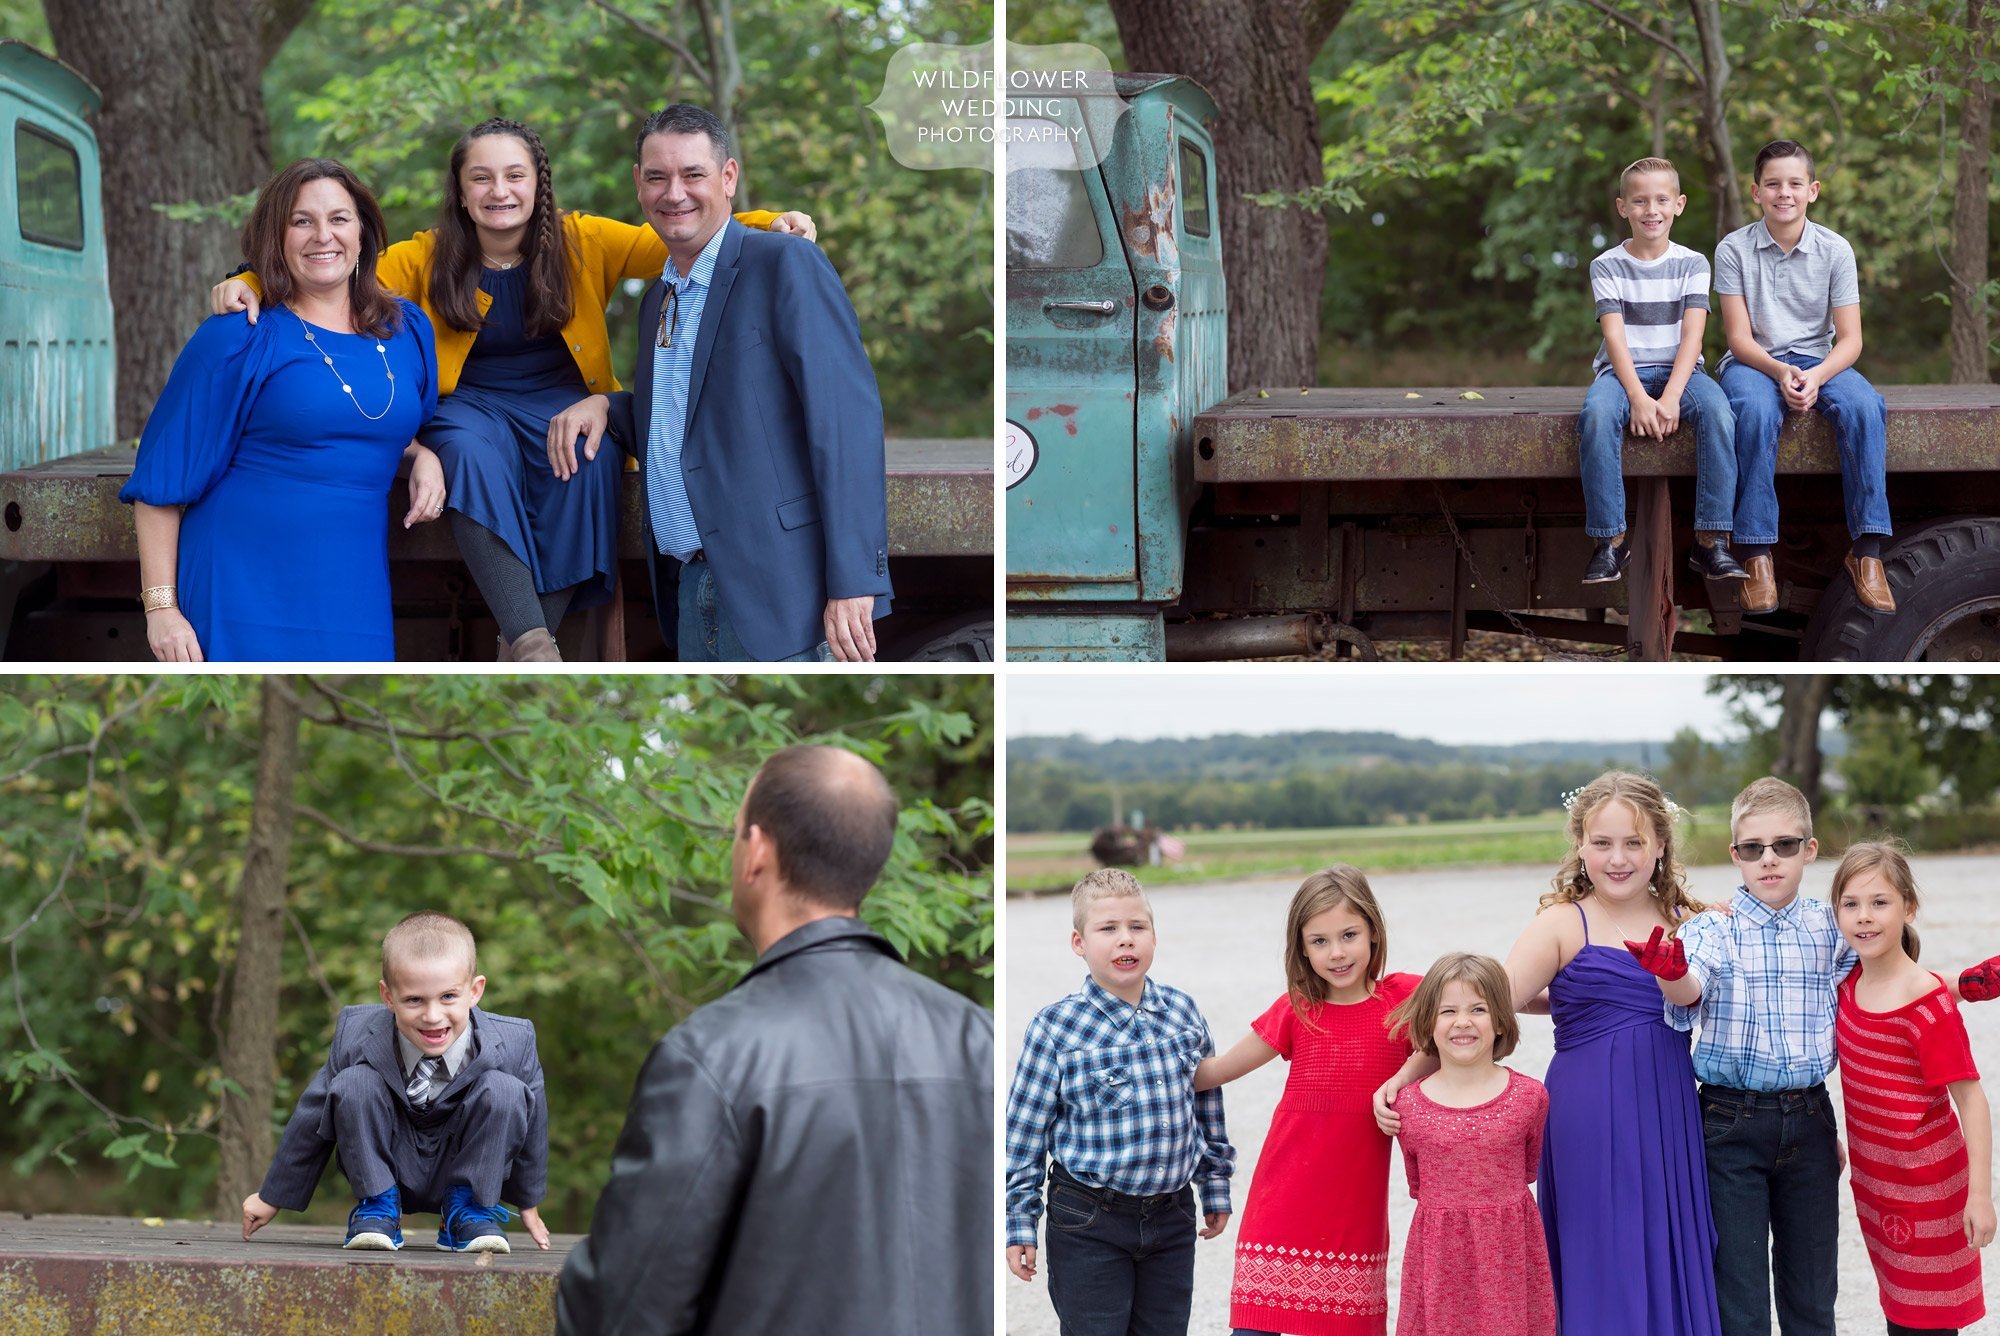 Cute kids pose for portraits after this Schwinn Barn wedding.